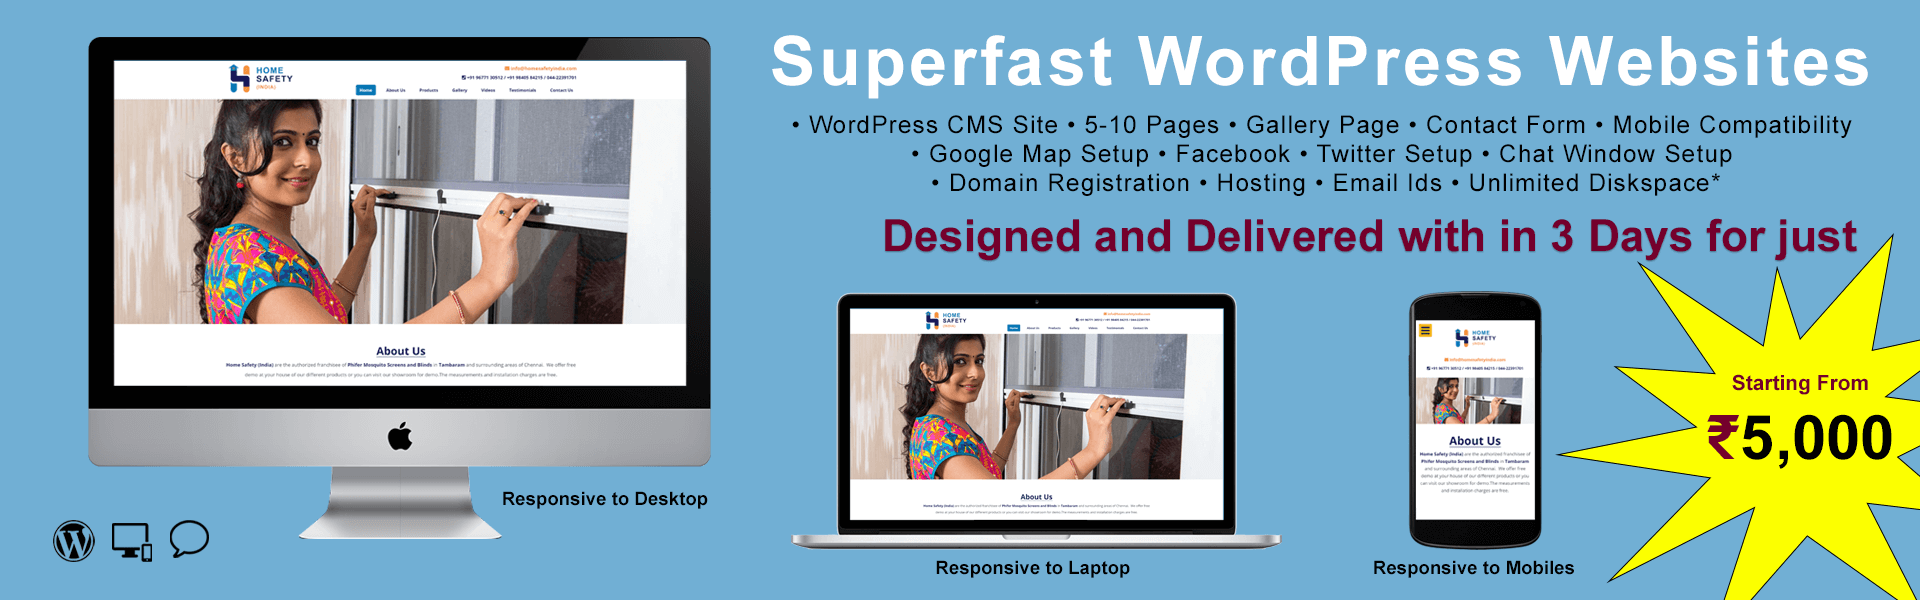 mobile-responsive-websites-developed-with-wordpress-in-tambaram-chennai